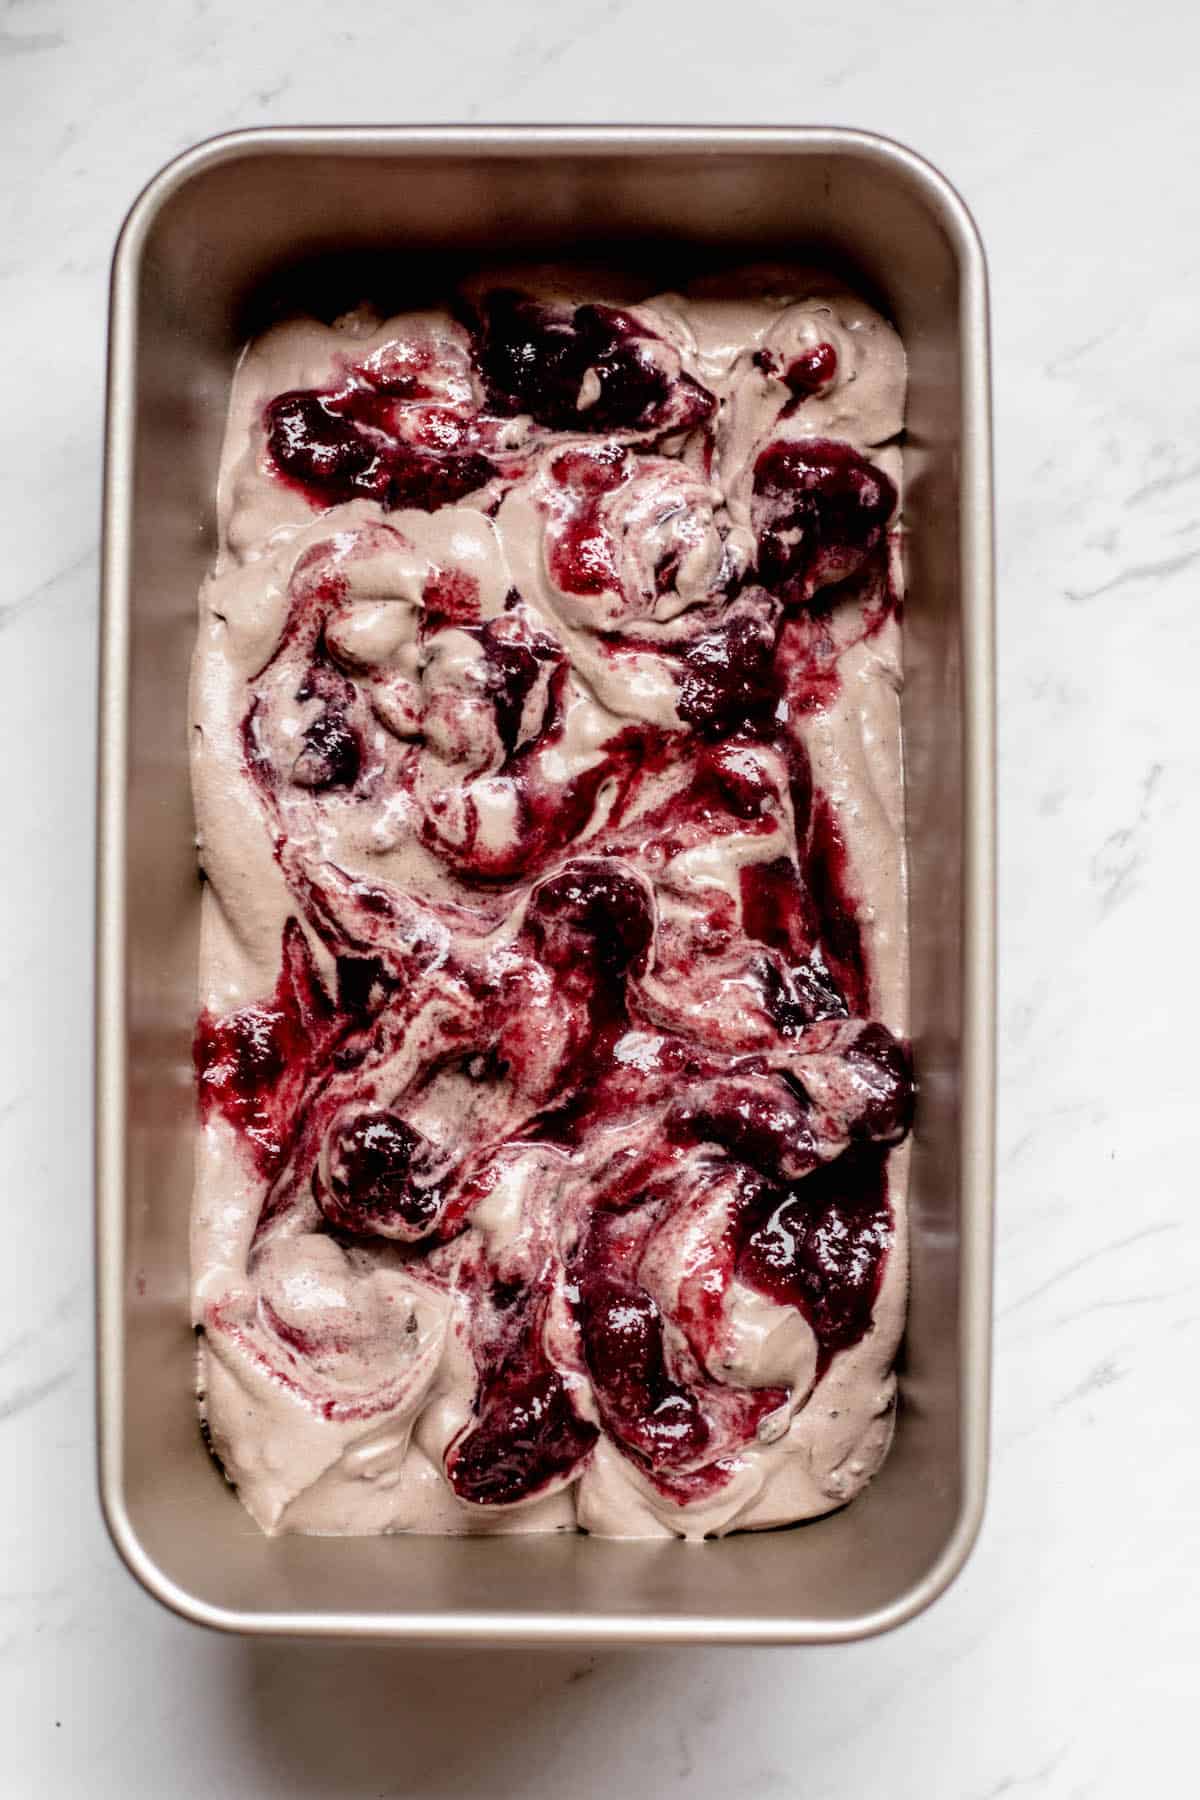 cherry swirled into ice cream.